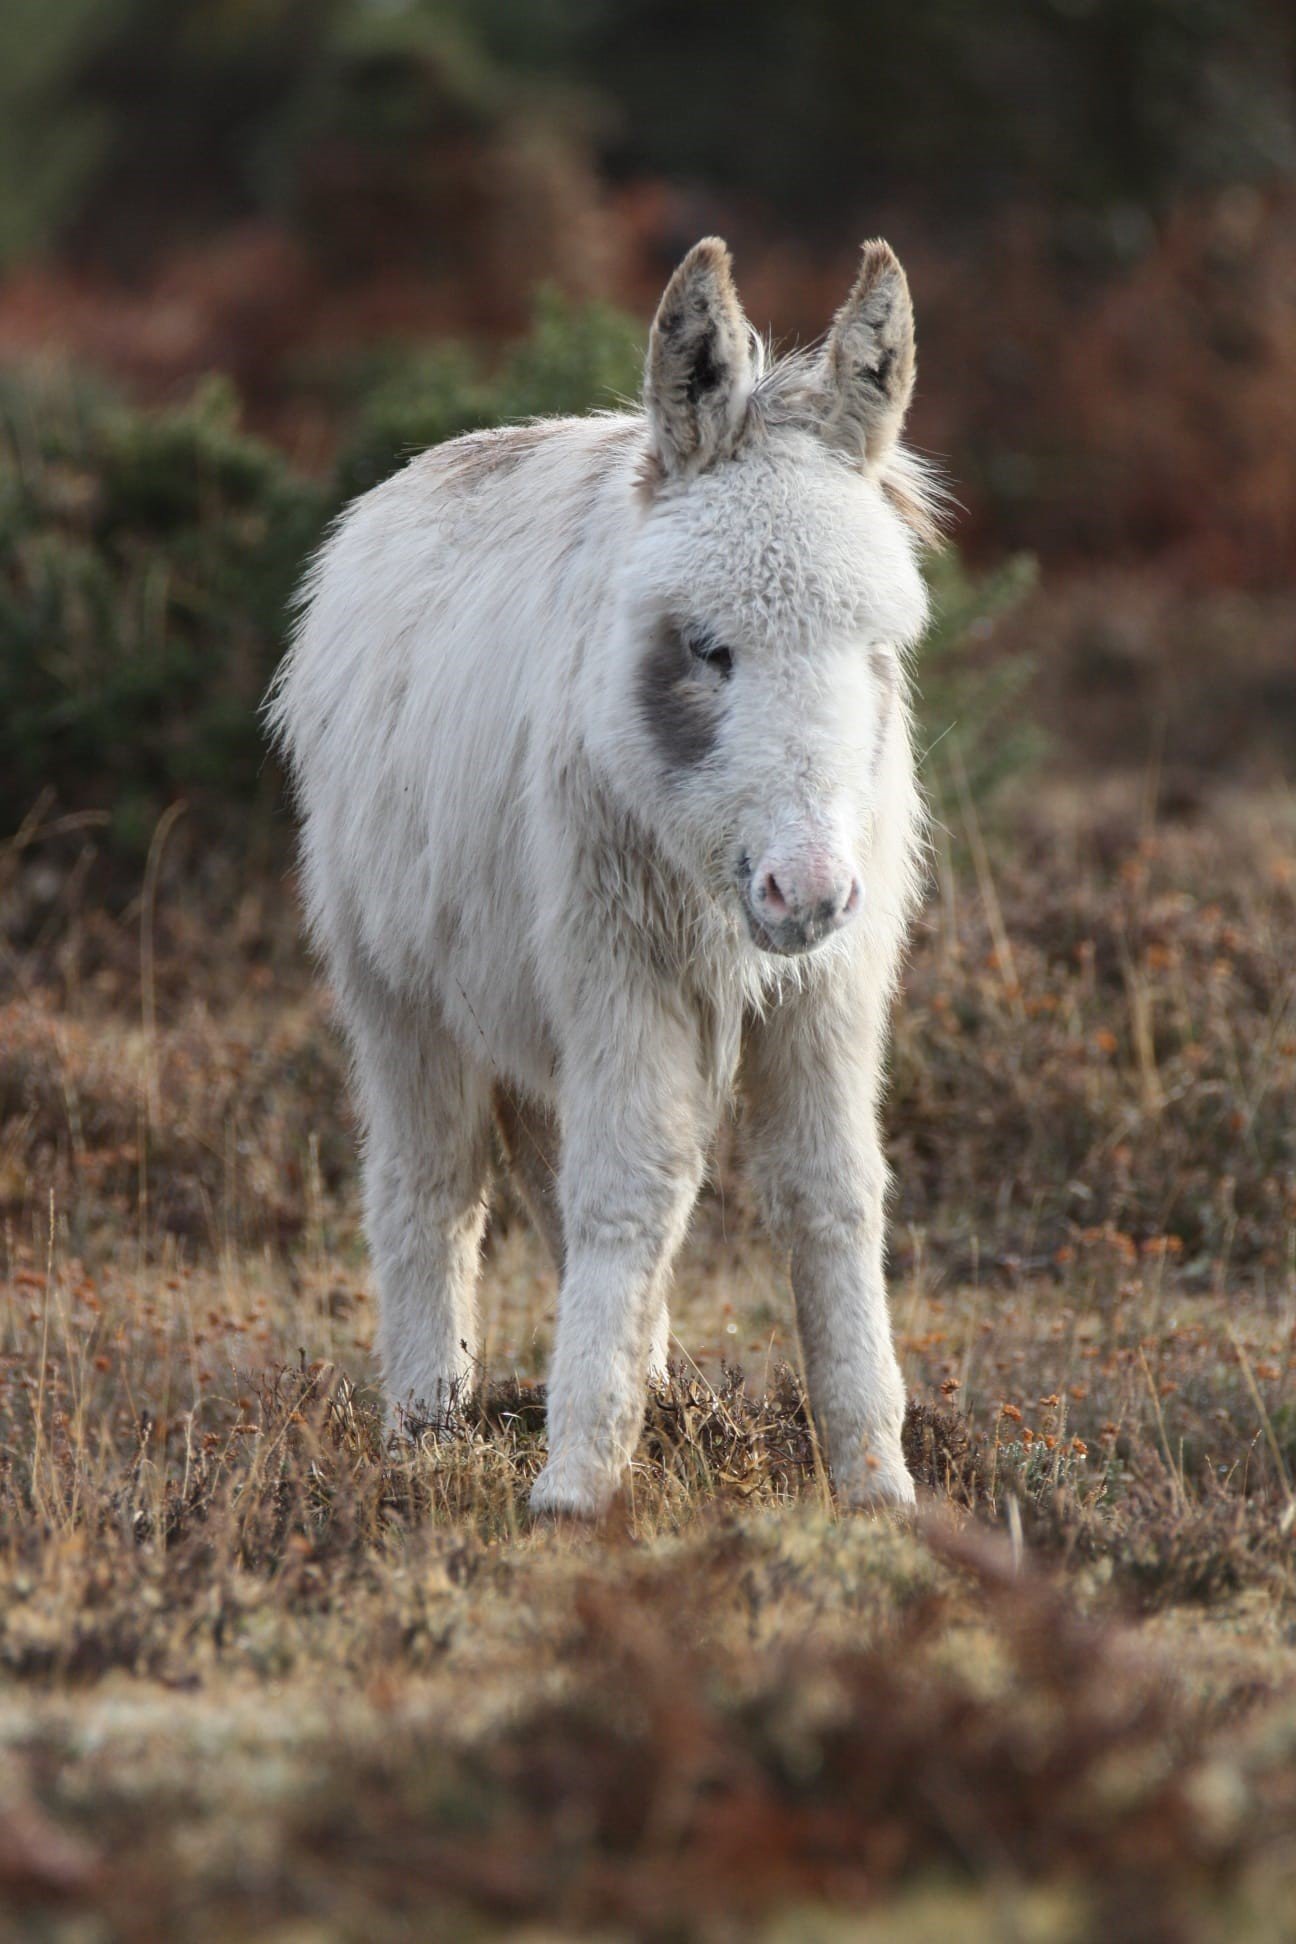 A white donkey stands on heathland